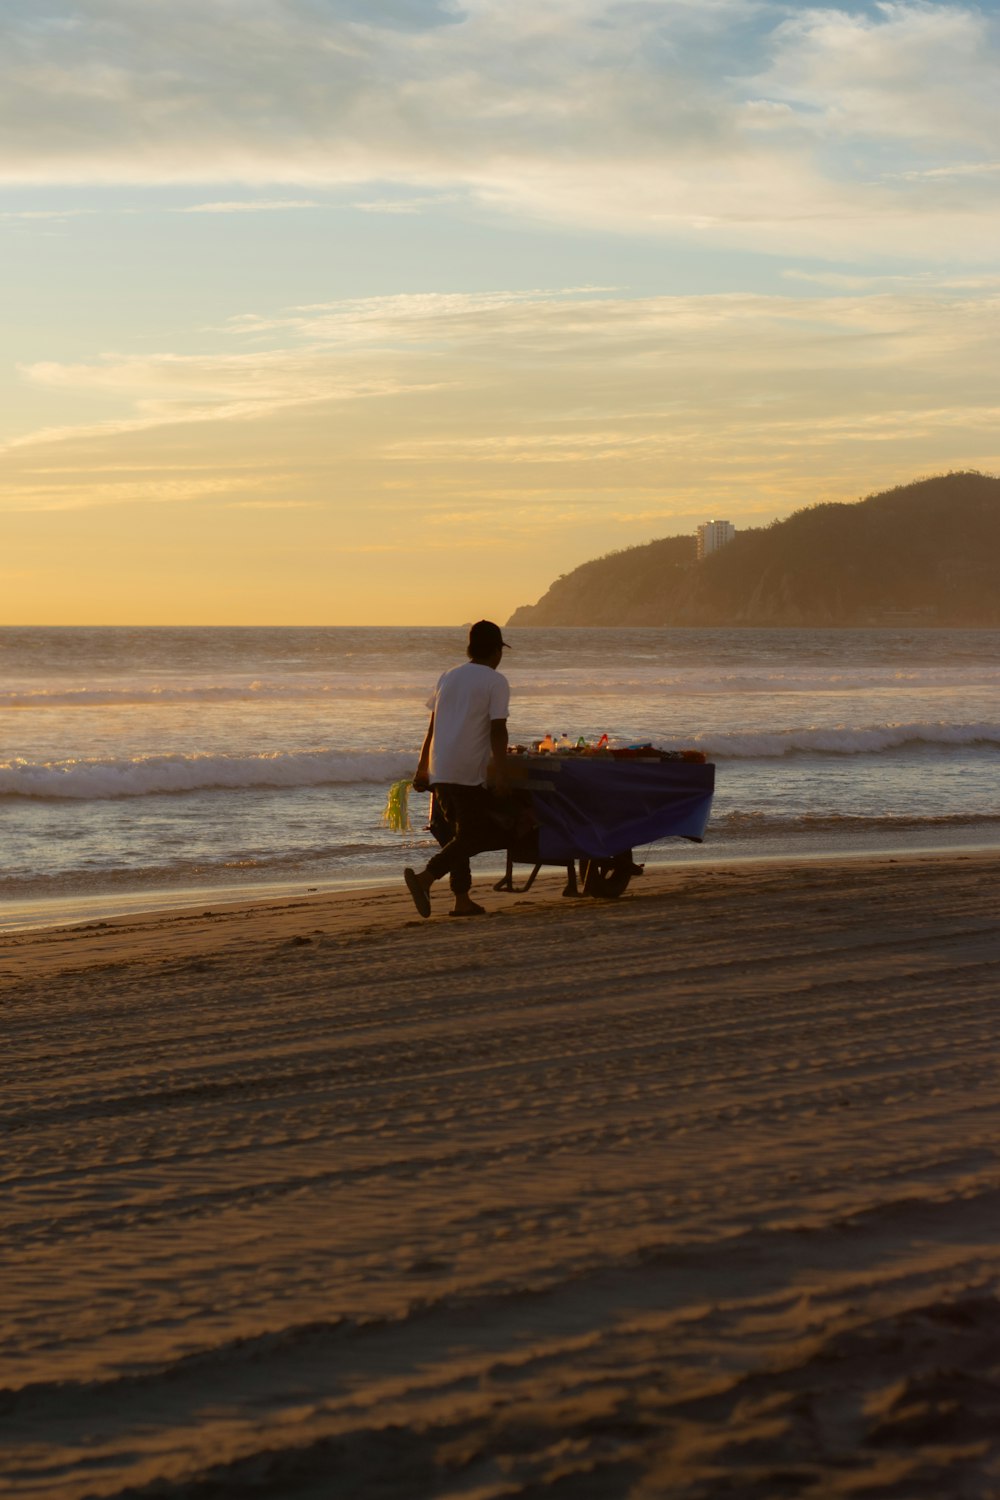 a man walking along a beach next to the ocean